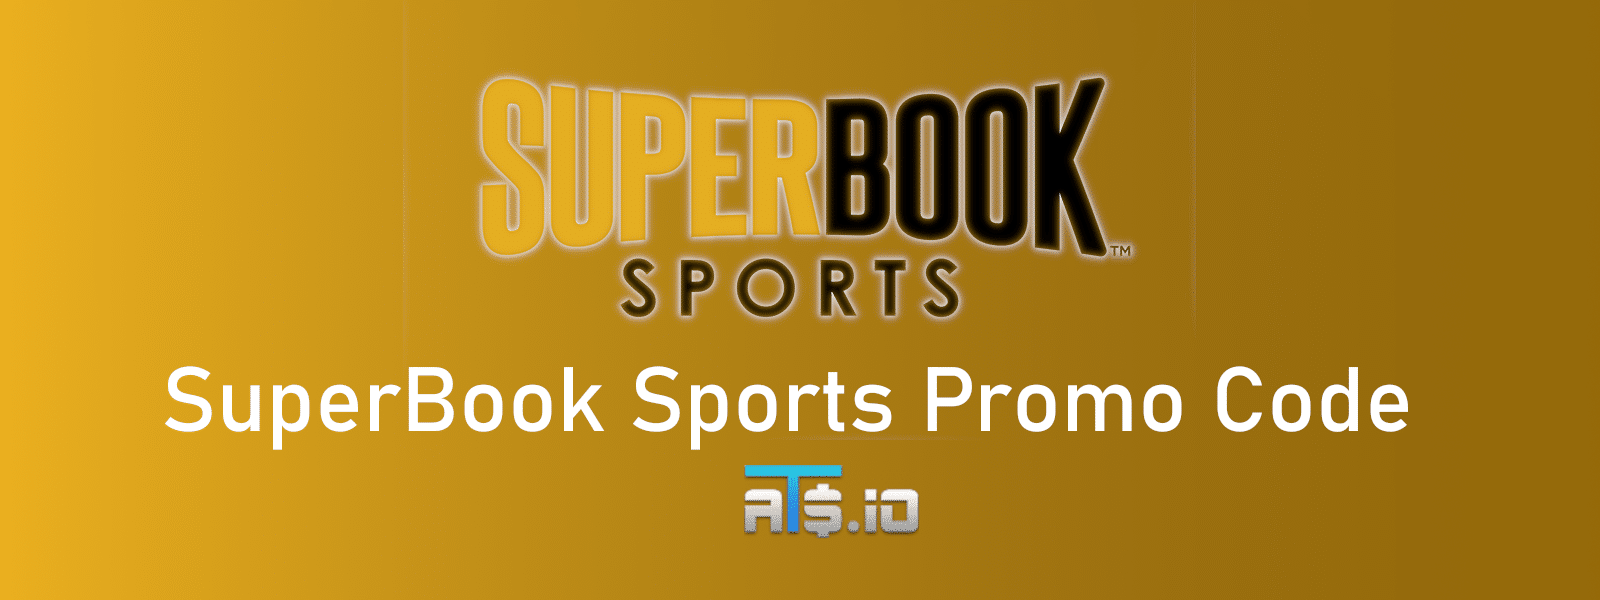 SuperBook Sports Promo Code